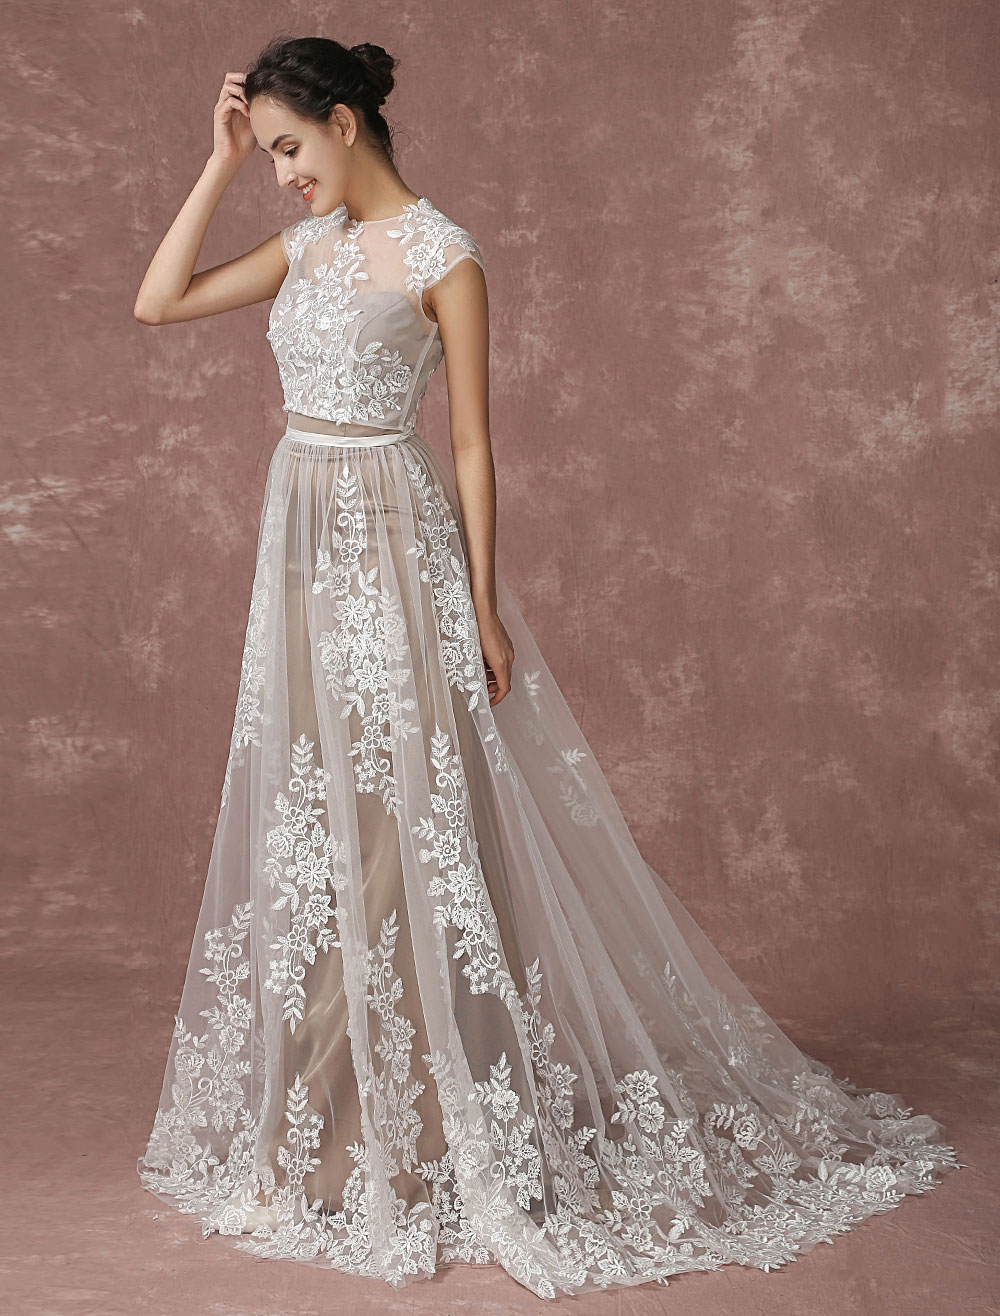 Lace Wedding Dress Beach 2 Pieces Bridal Gown Lace Shrug Illusion